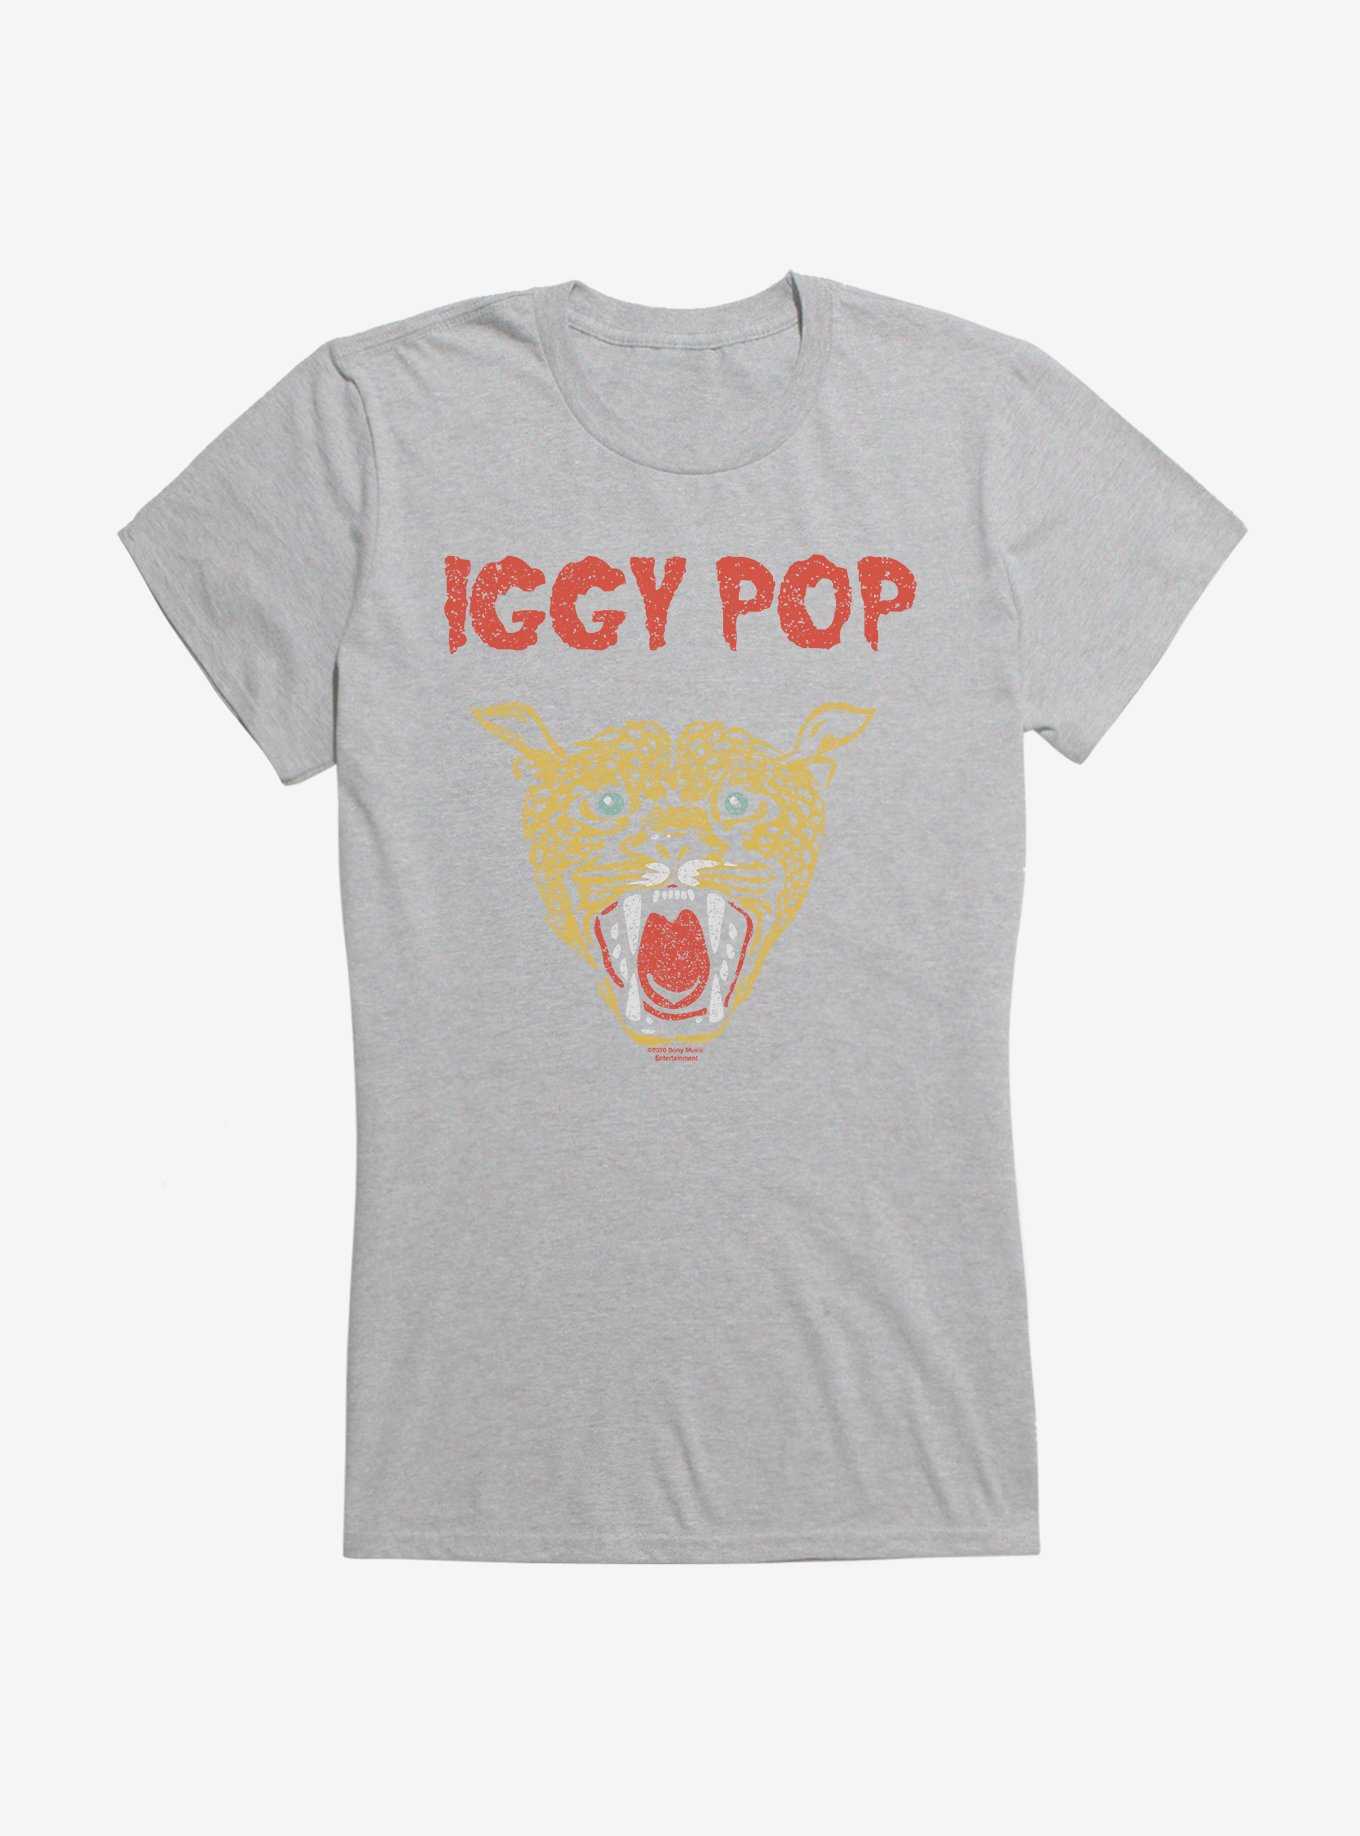 Iggy Pop Name And Cheetah Girls T-Shirt, , hi-res